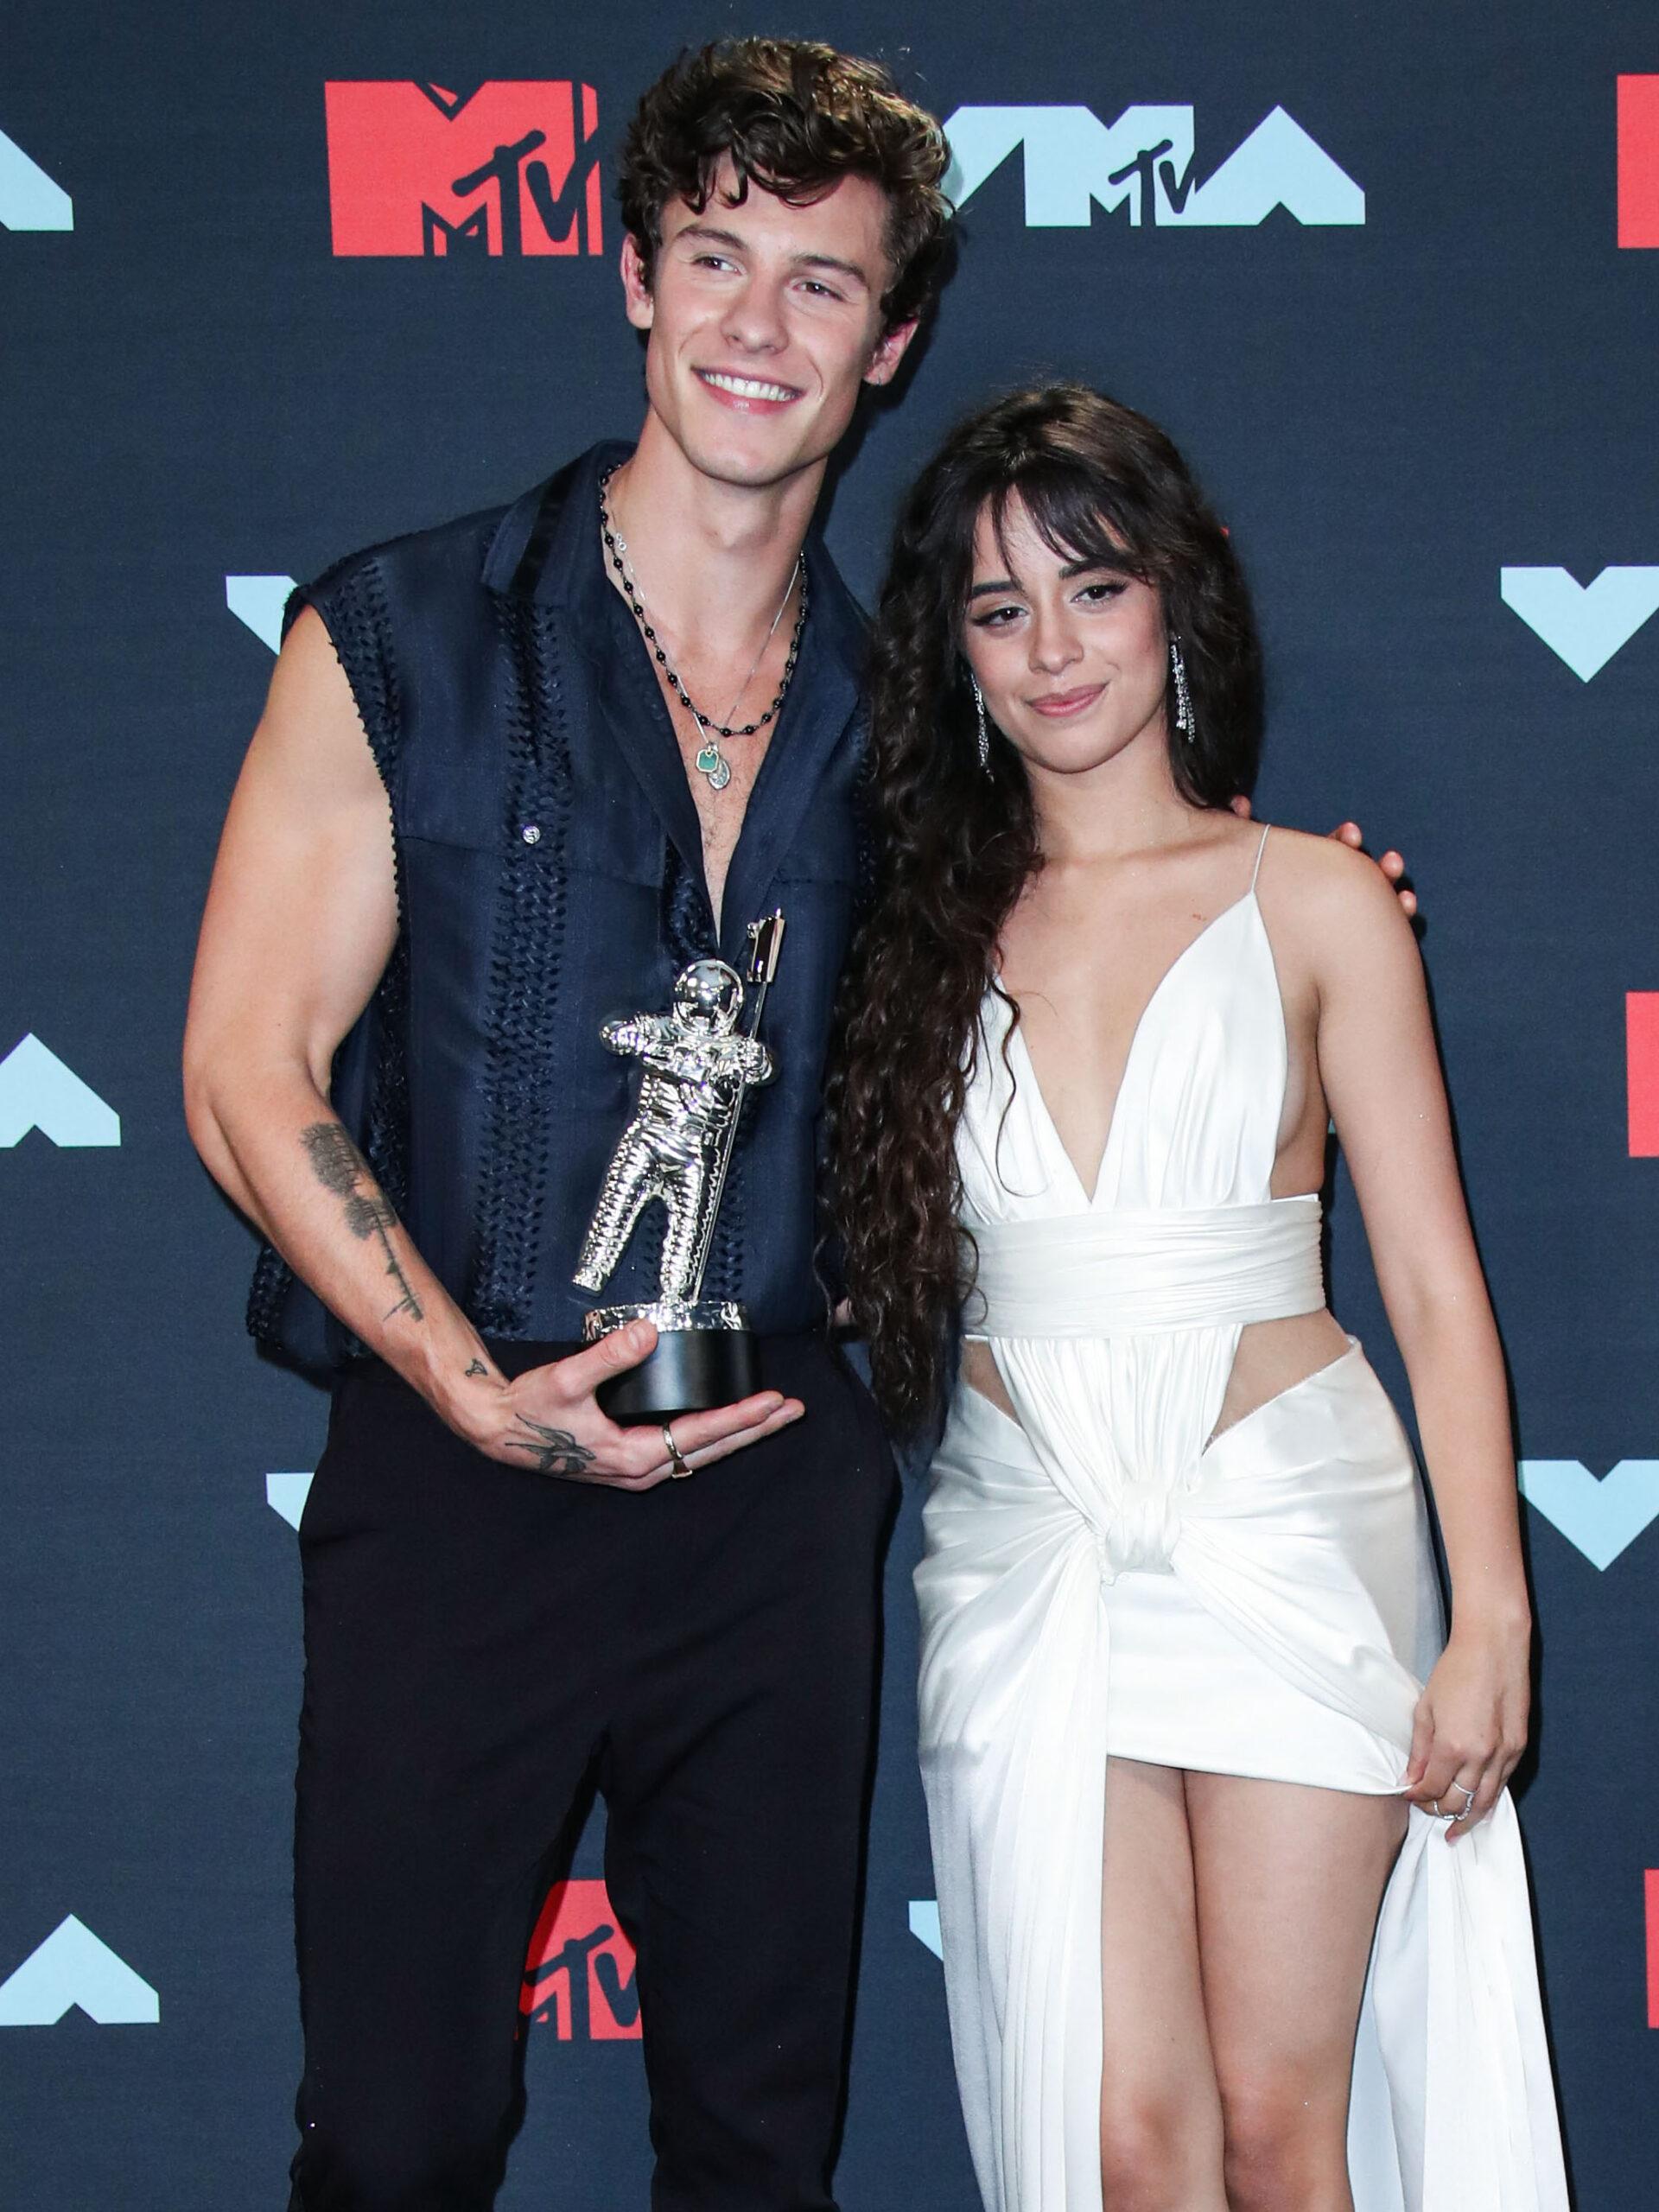 Singer Shawn Mendes and ex girlfriend/singer Camila Cabello wearing a Balmain dress.